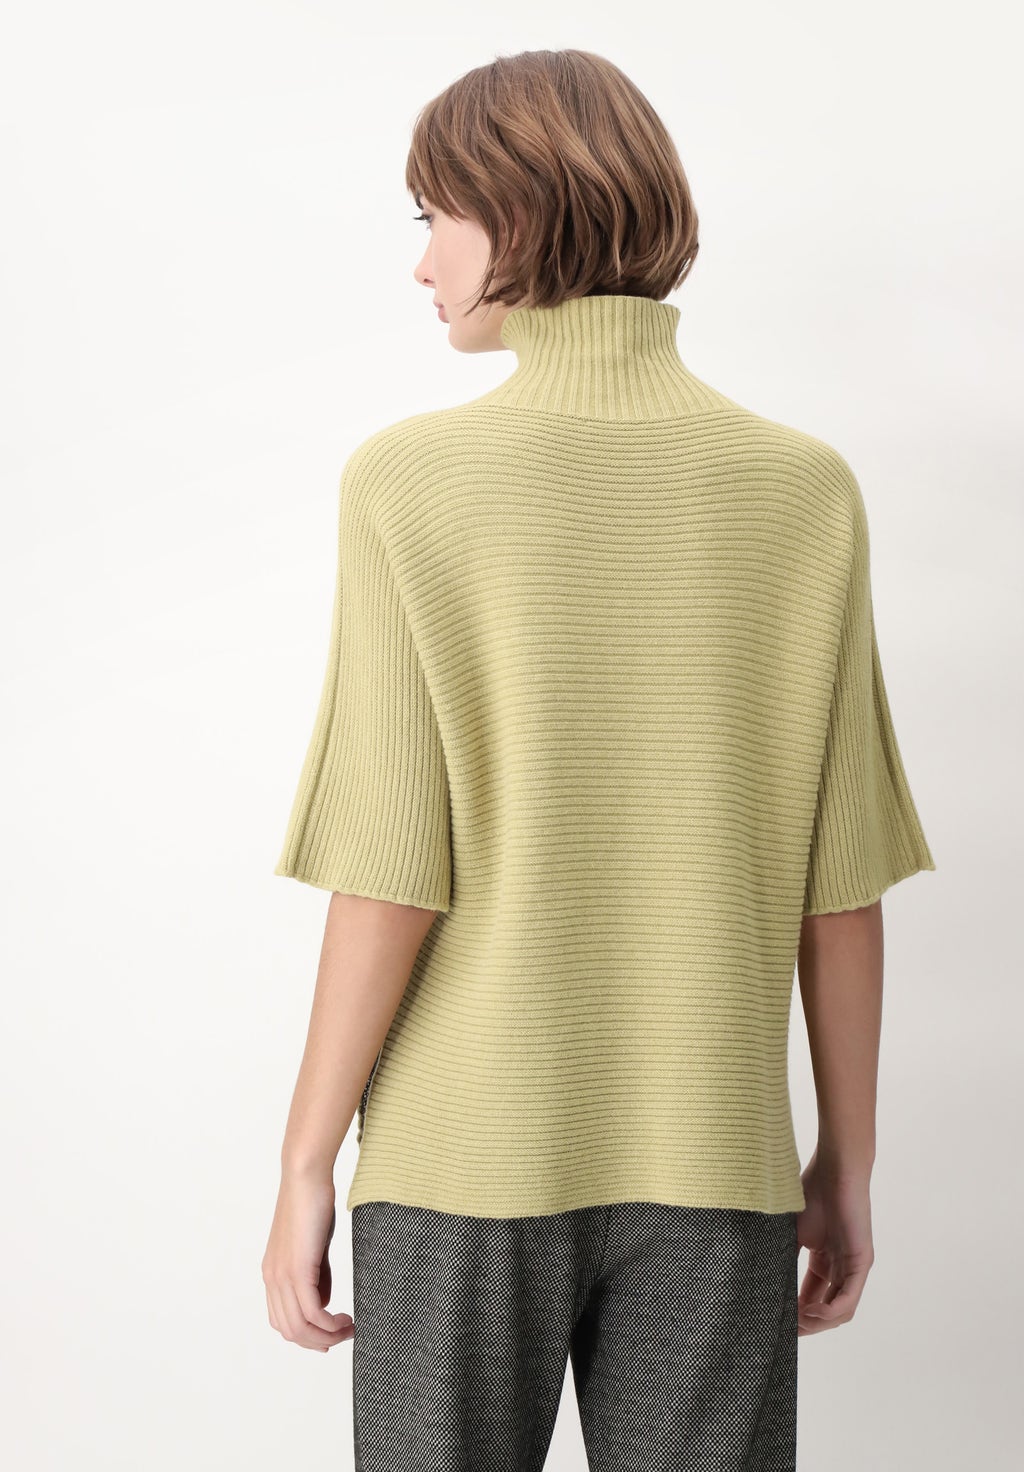 Viscose and Angora Comfy Knit 3/4 Sleeve Sweater